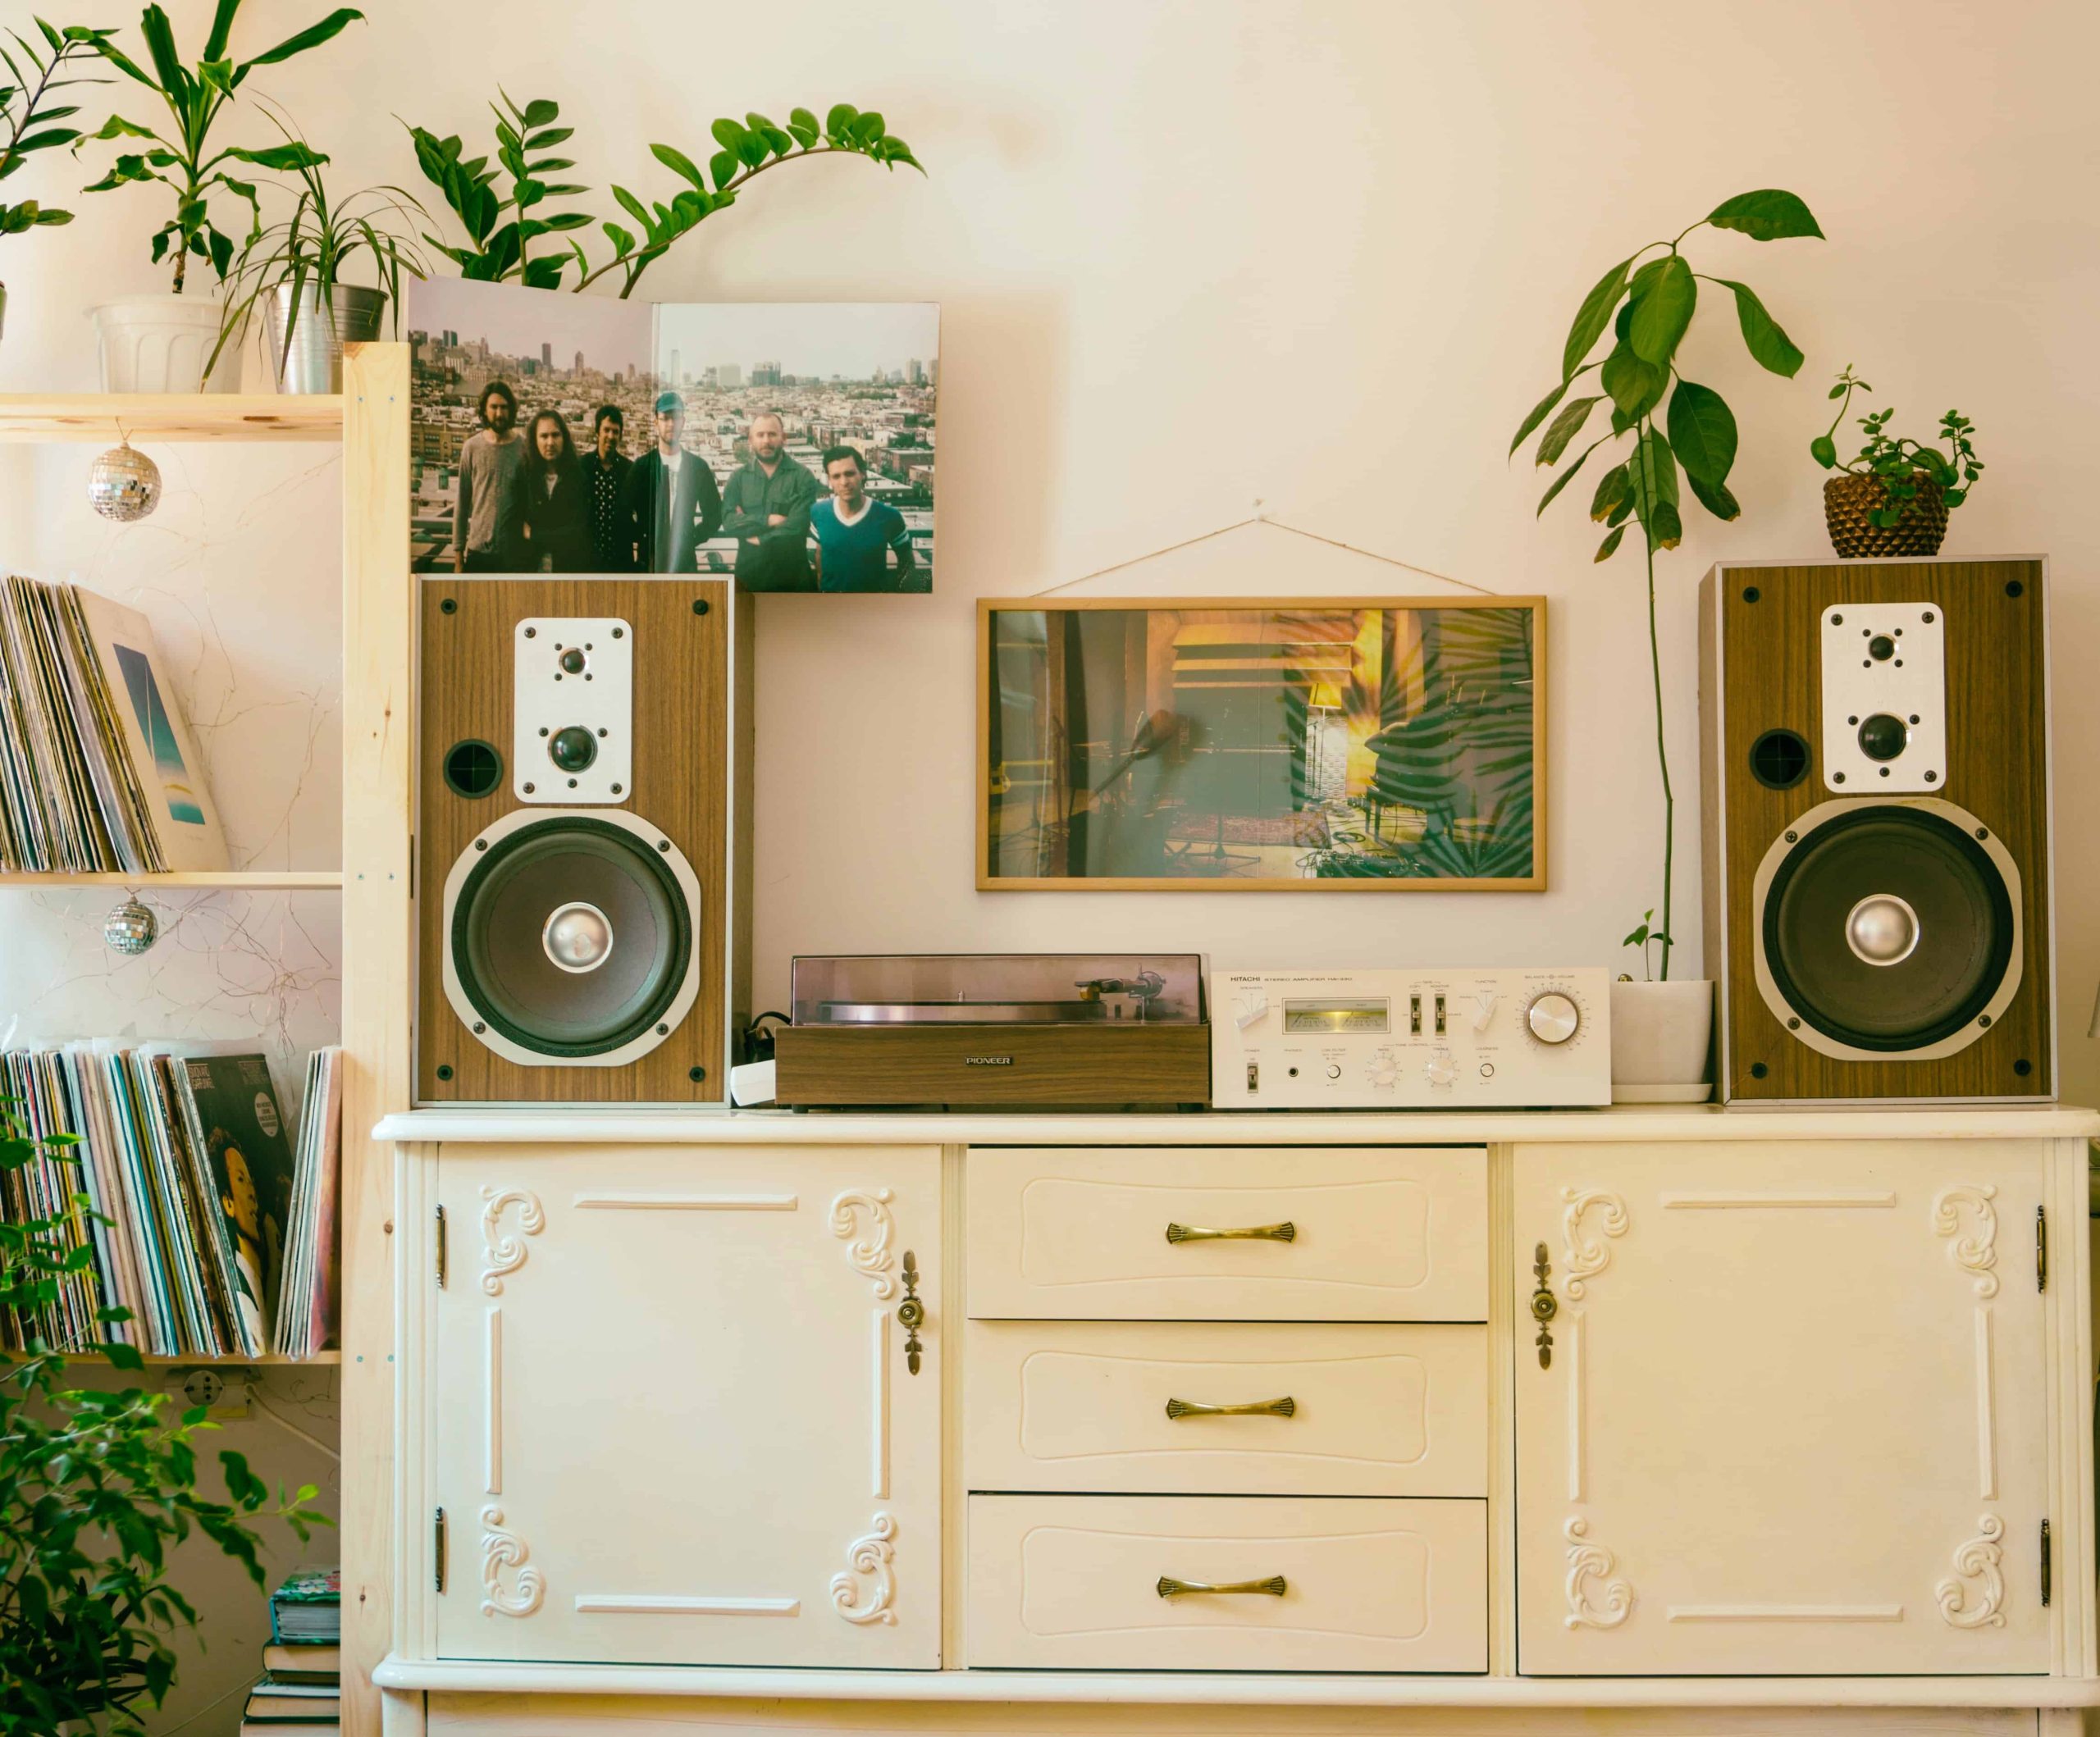 6 reasons to buy bookshelf speakers